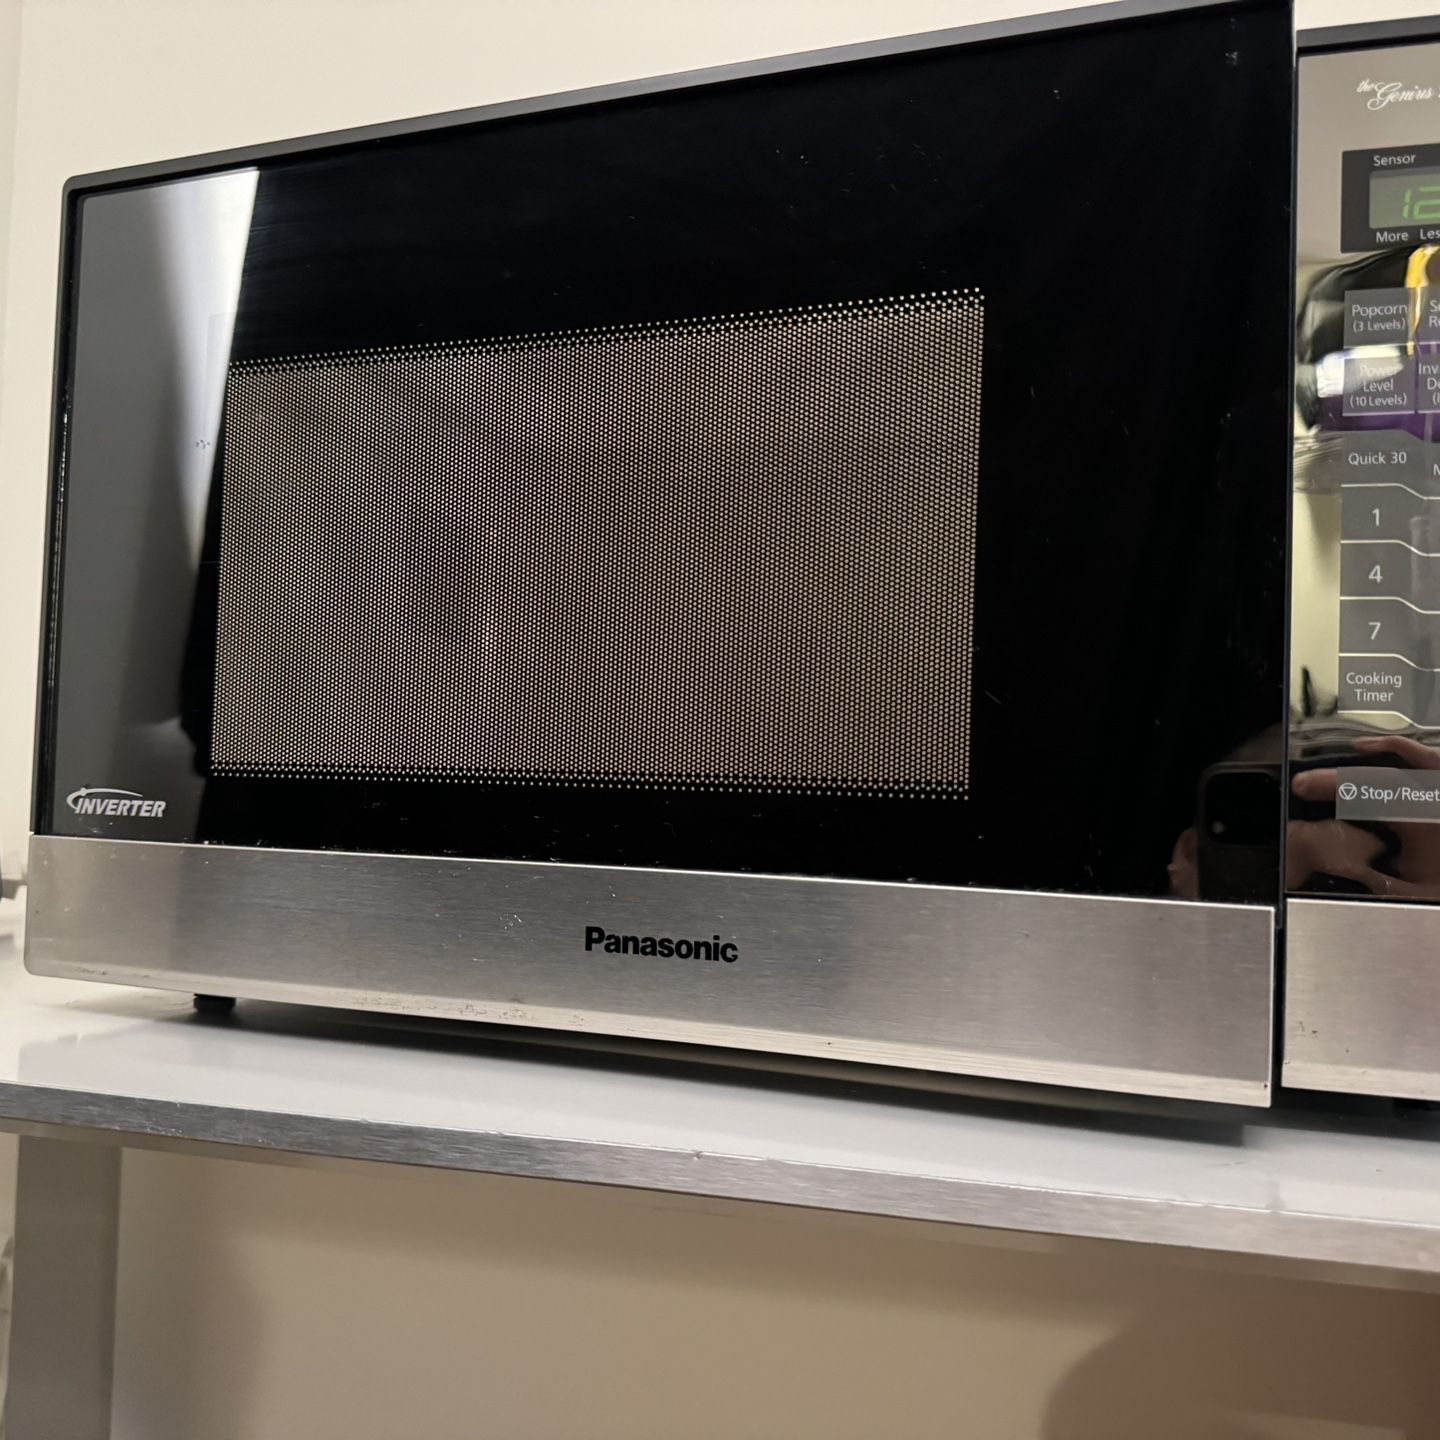 Panasonic NN-SN686S 1.2 Cu. Ft. 1,200 Watt Microwave, Stainless Steel 